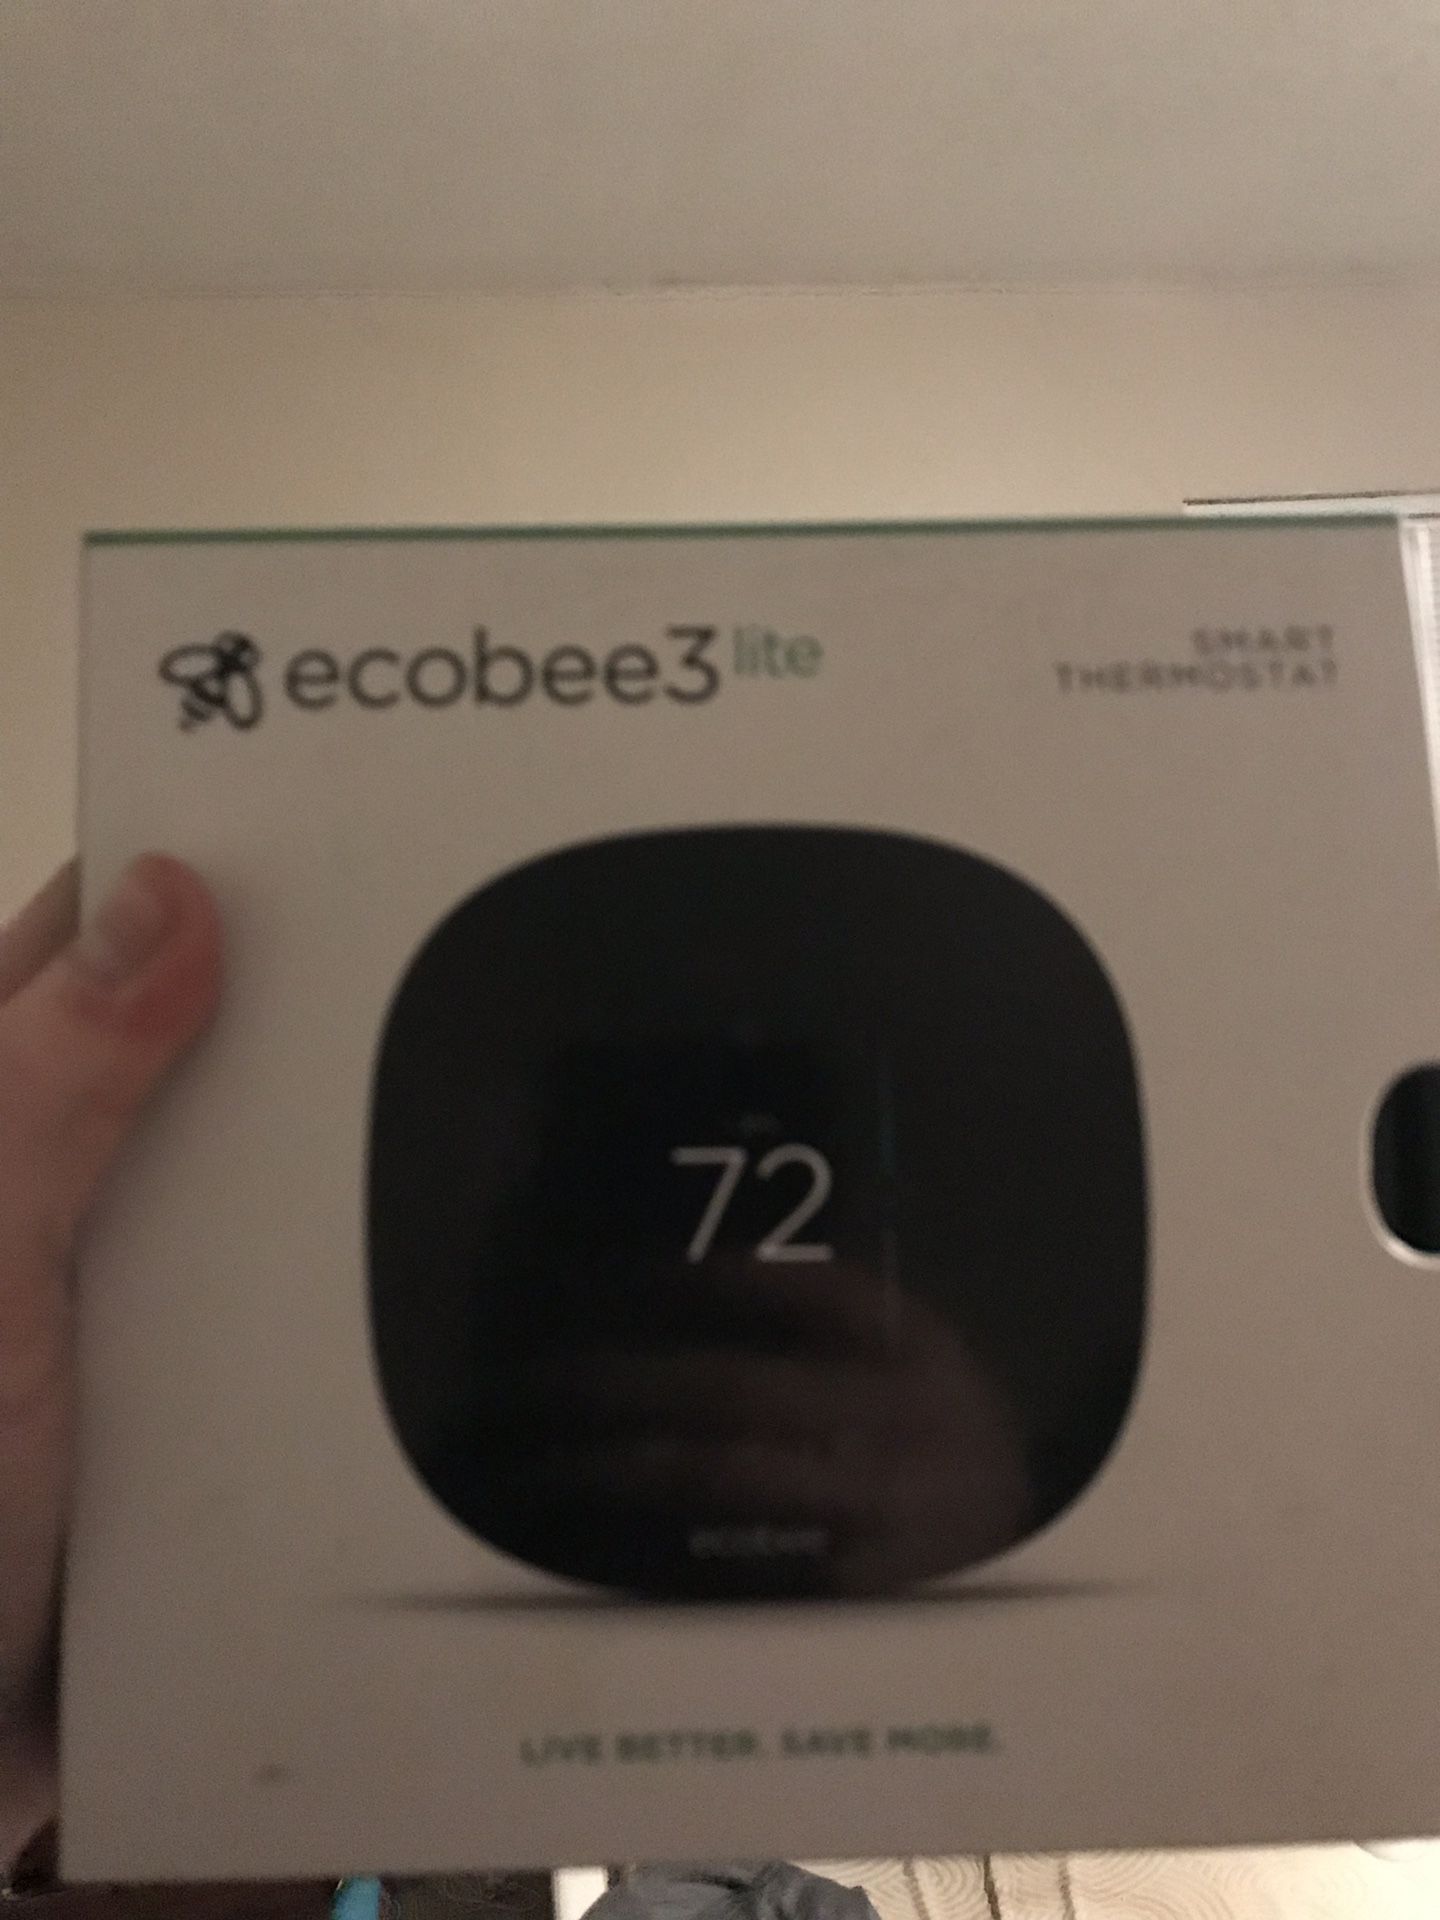 Ecobee3 life smart thermostat $120